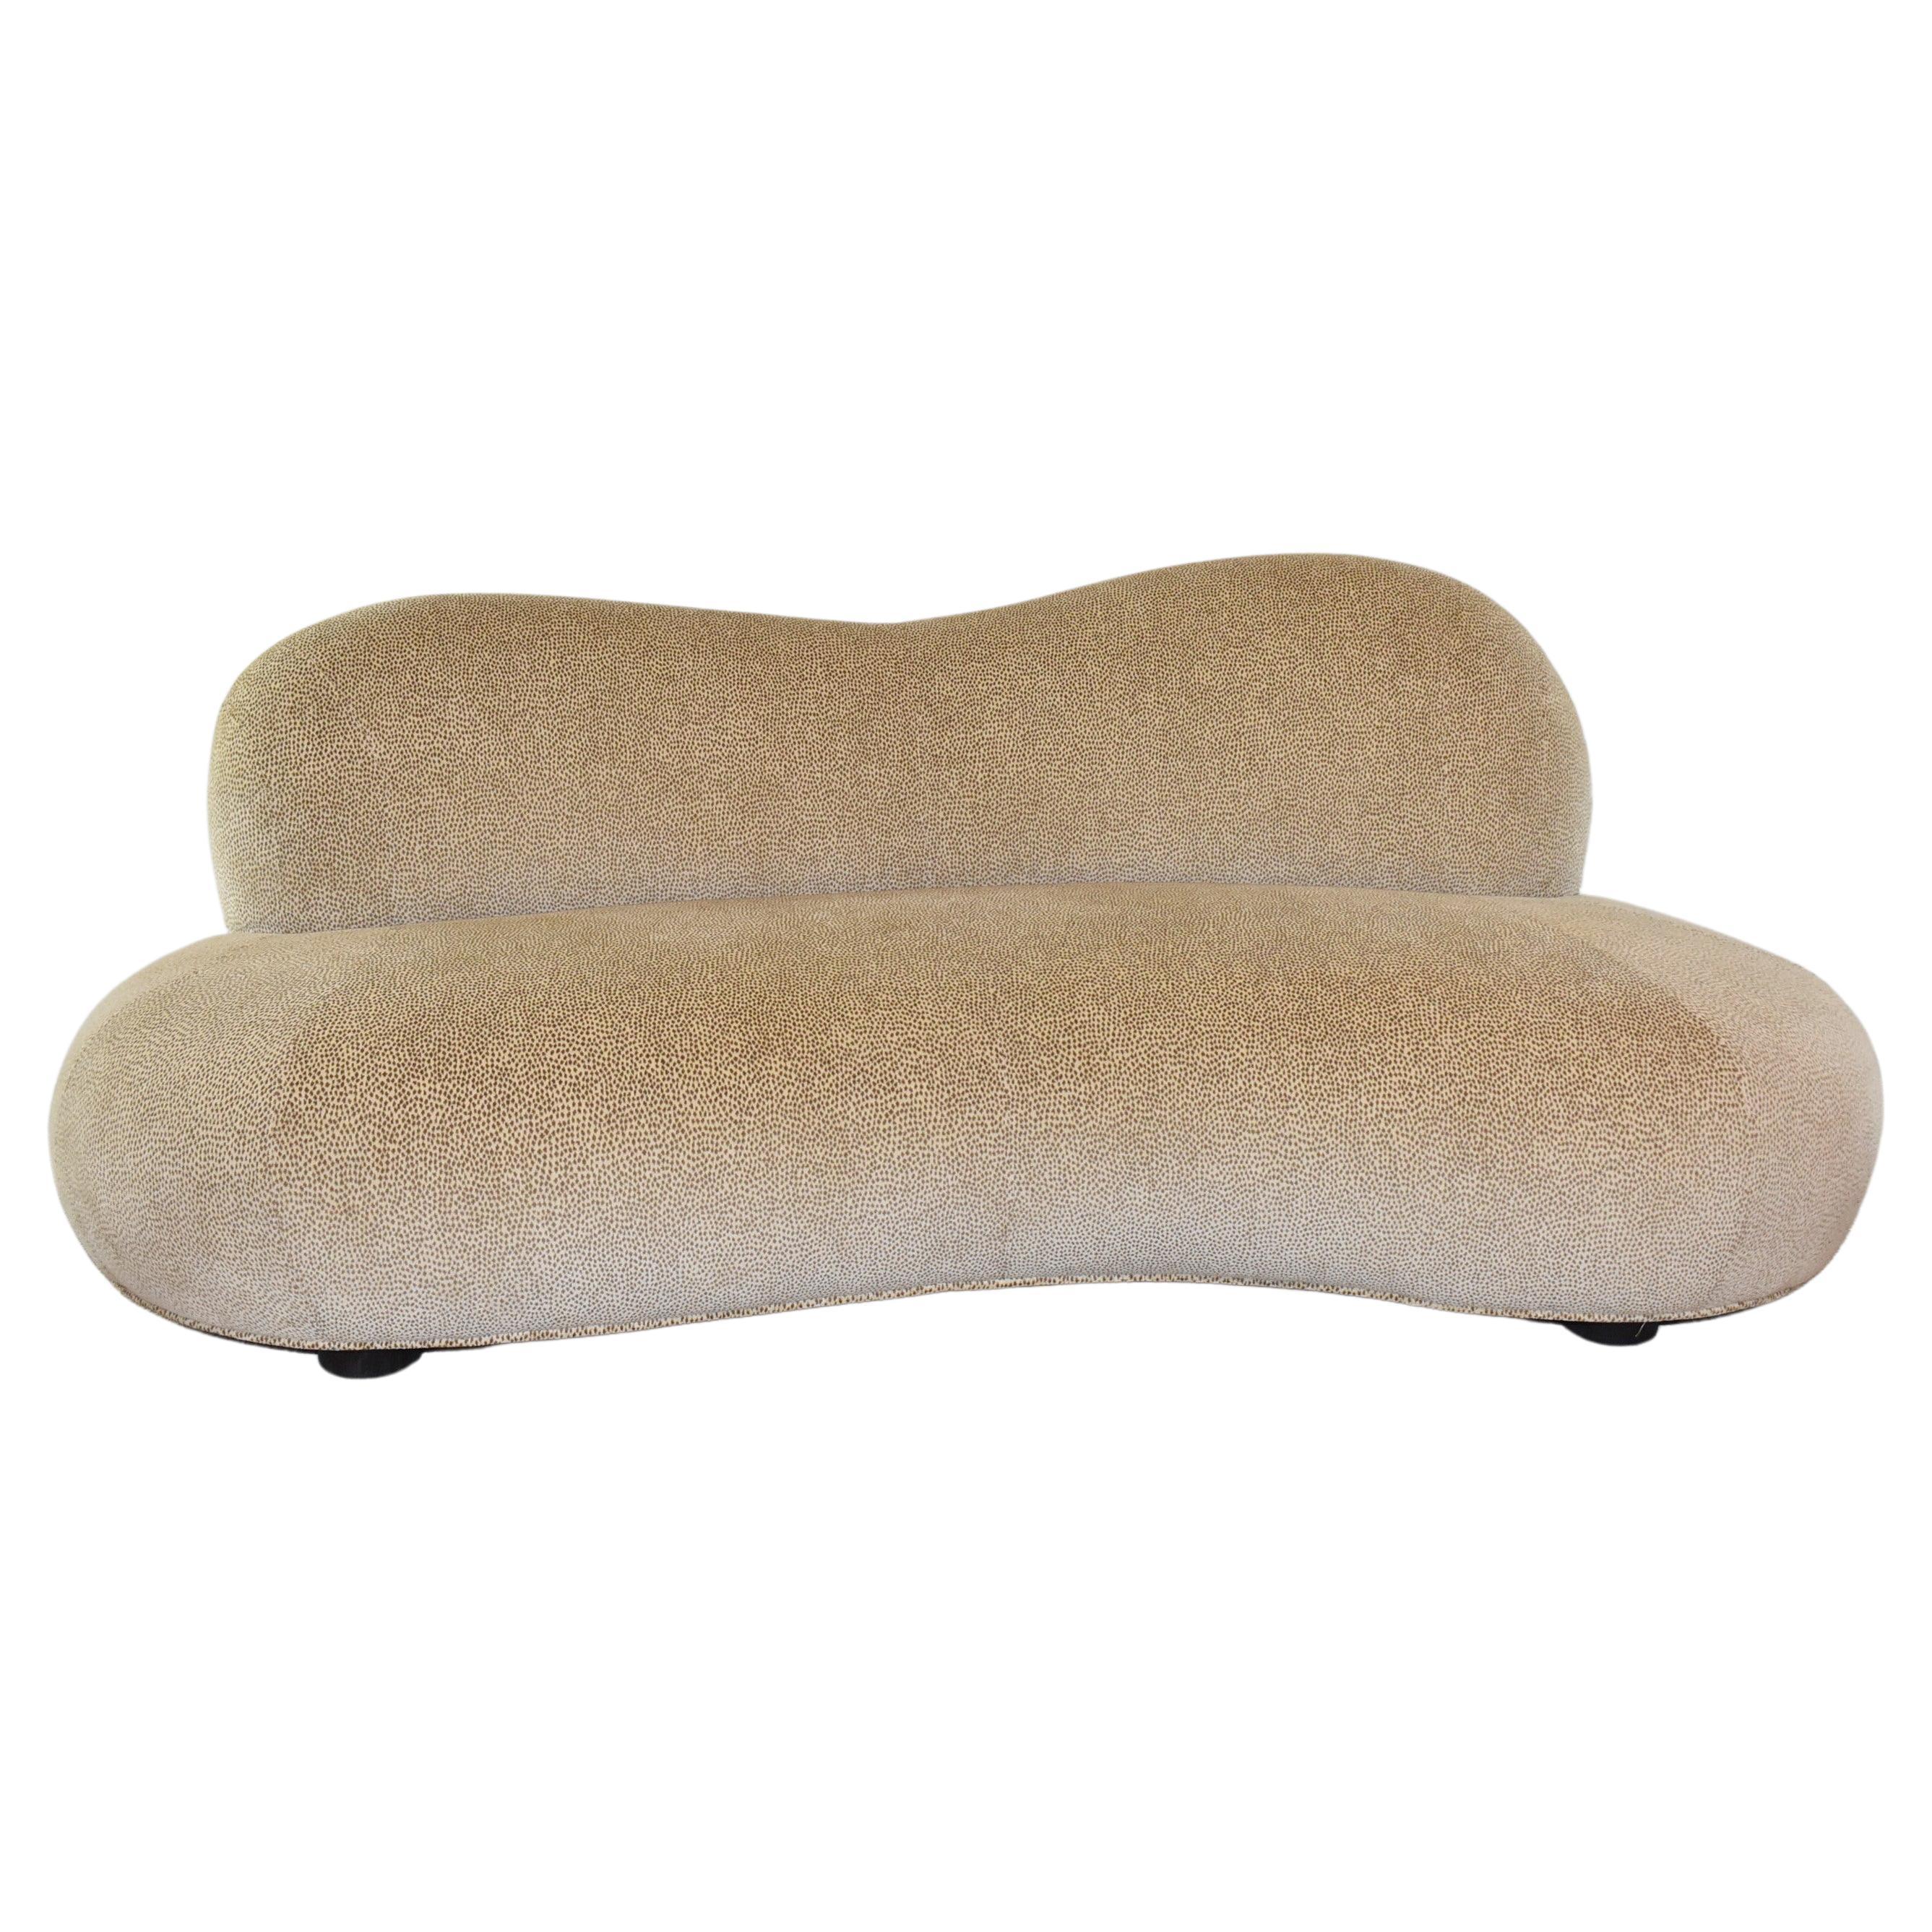 Preview Cloud Vladimir Kagan Style Organic Shape Sofa For Sale